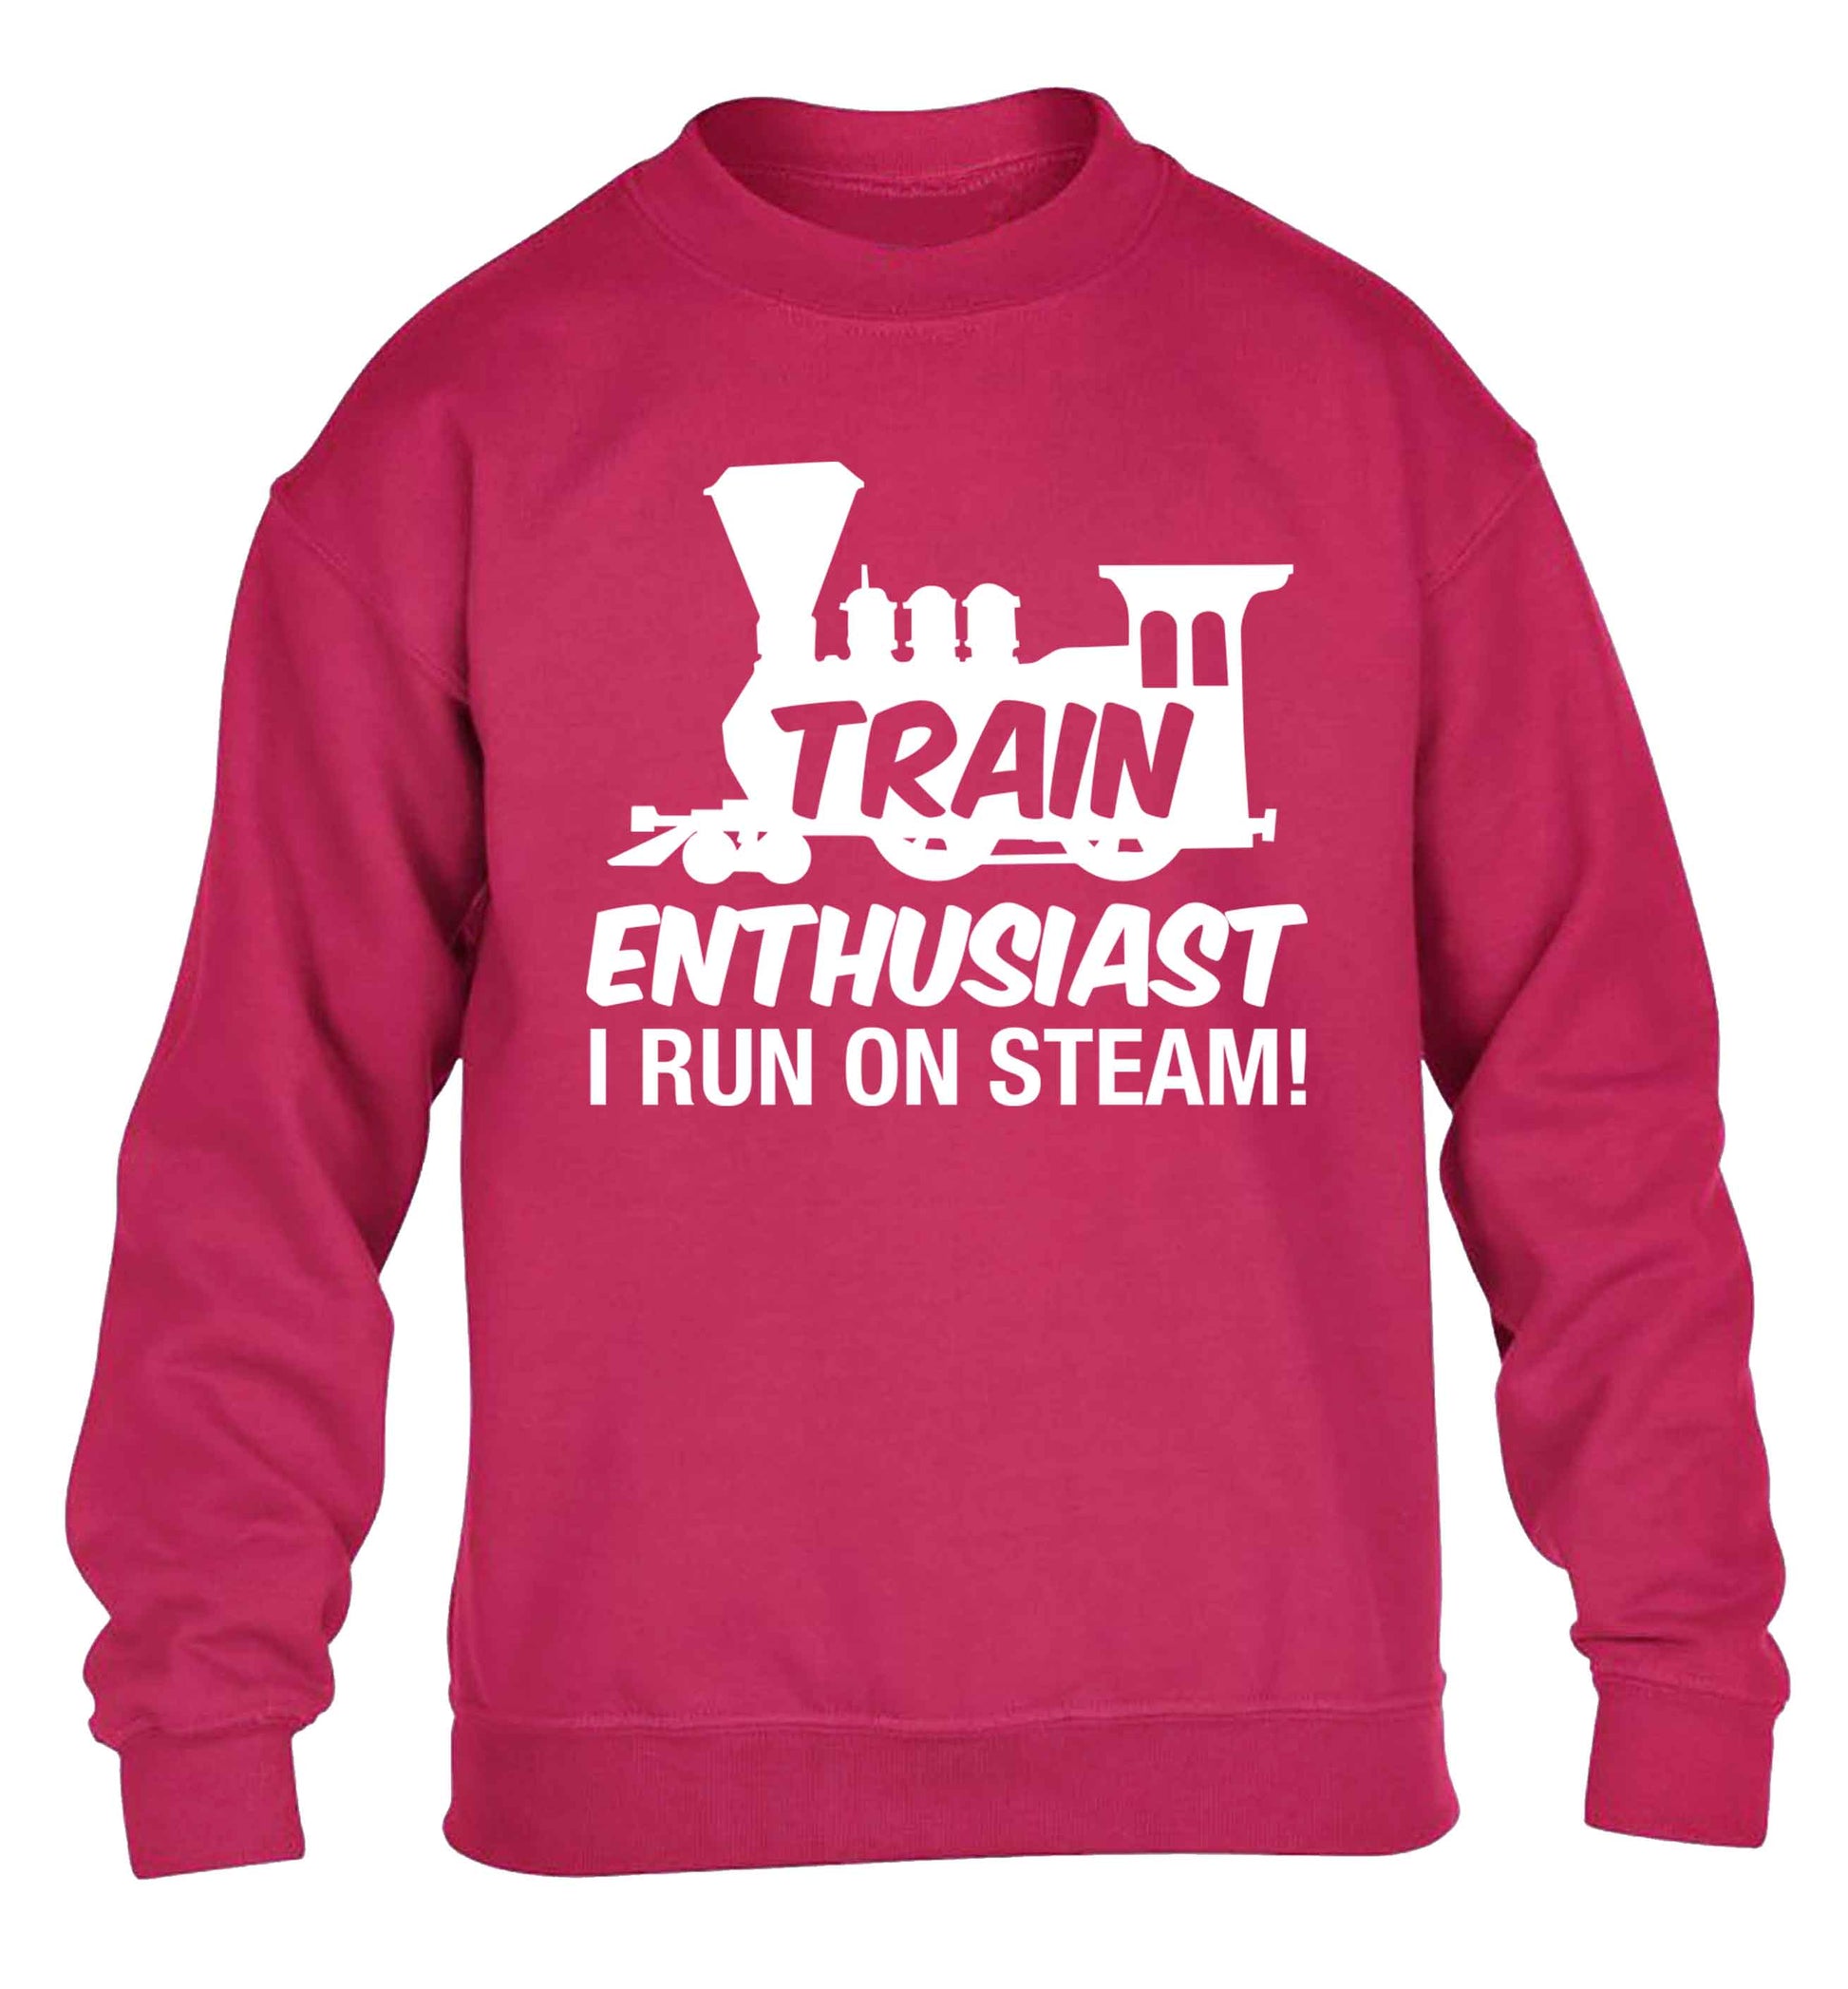 Train enthusiast I run on steam children's pink sweater 12-13 Years